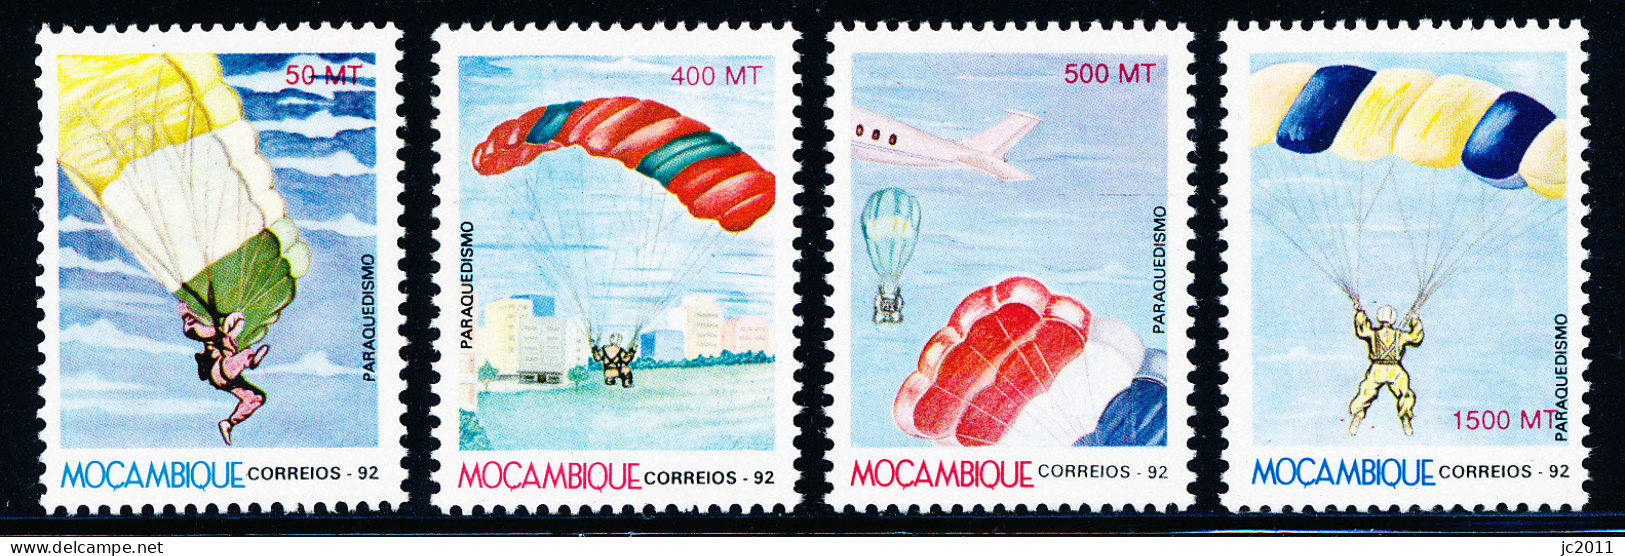 Mozambique - 1992 - Parachuting - MNH - Mozambique